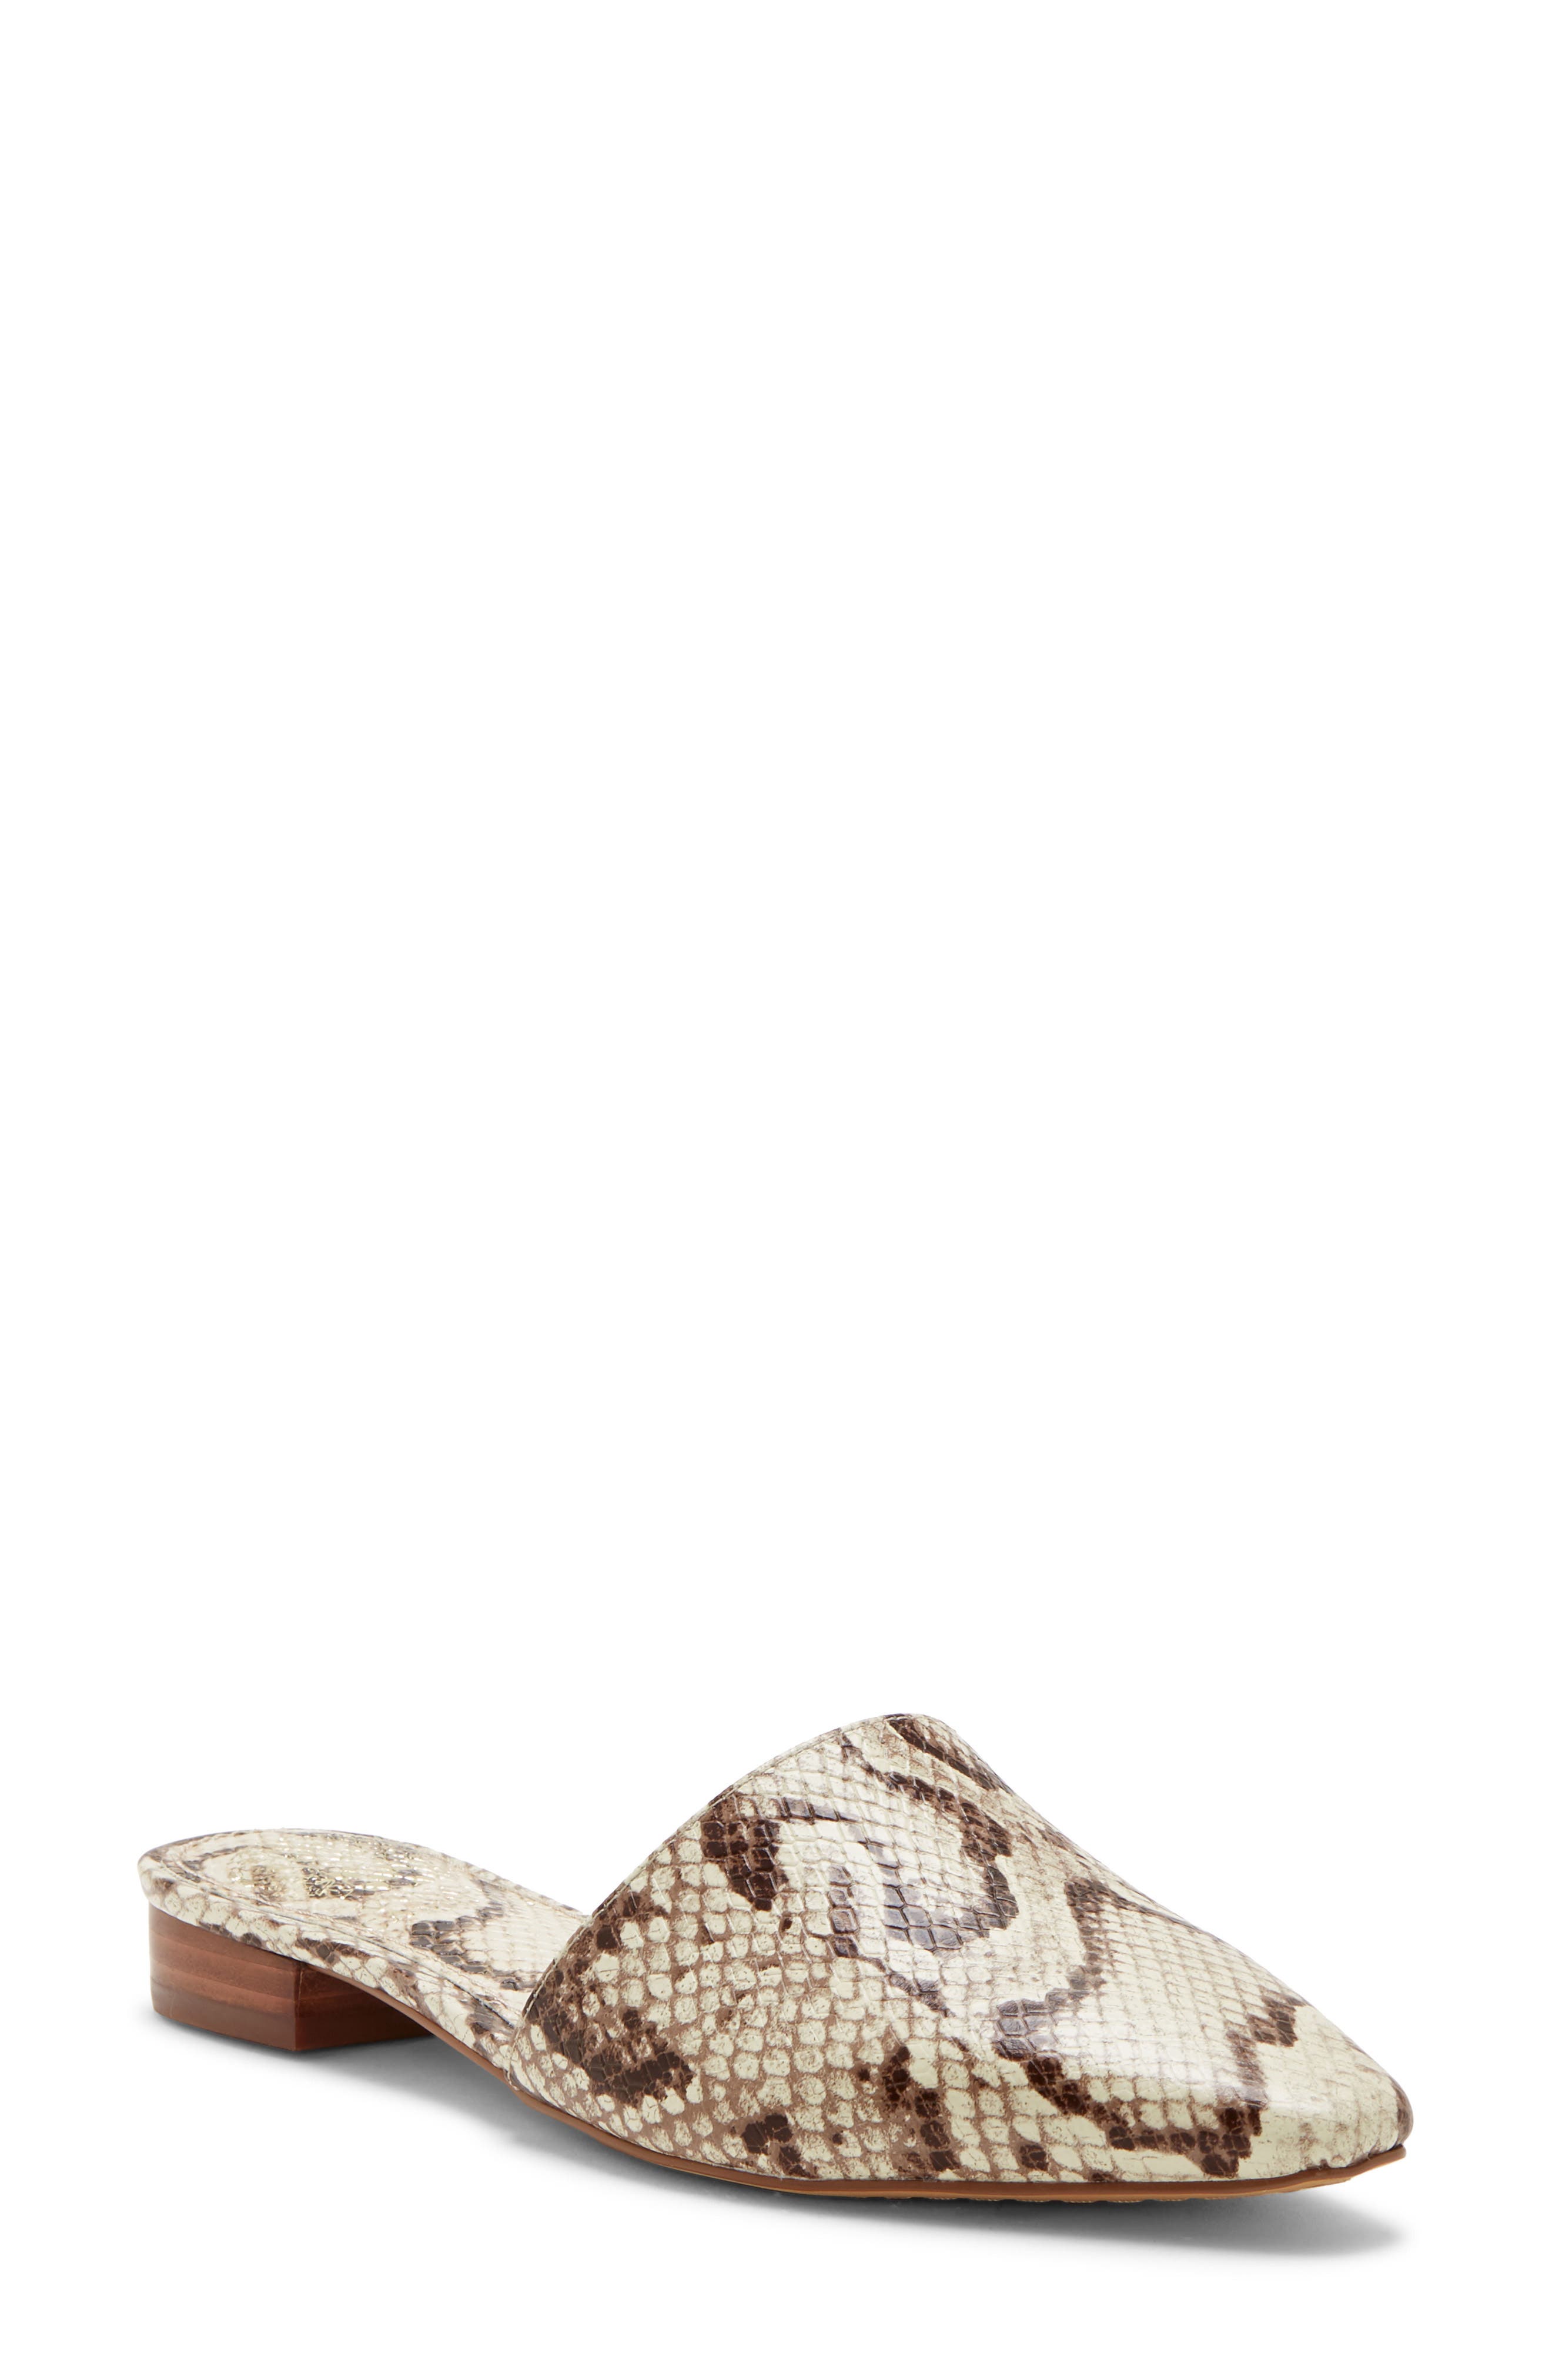 Leopard \u0026 Animal Print Shoes 